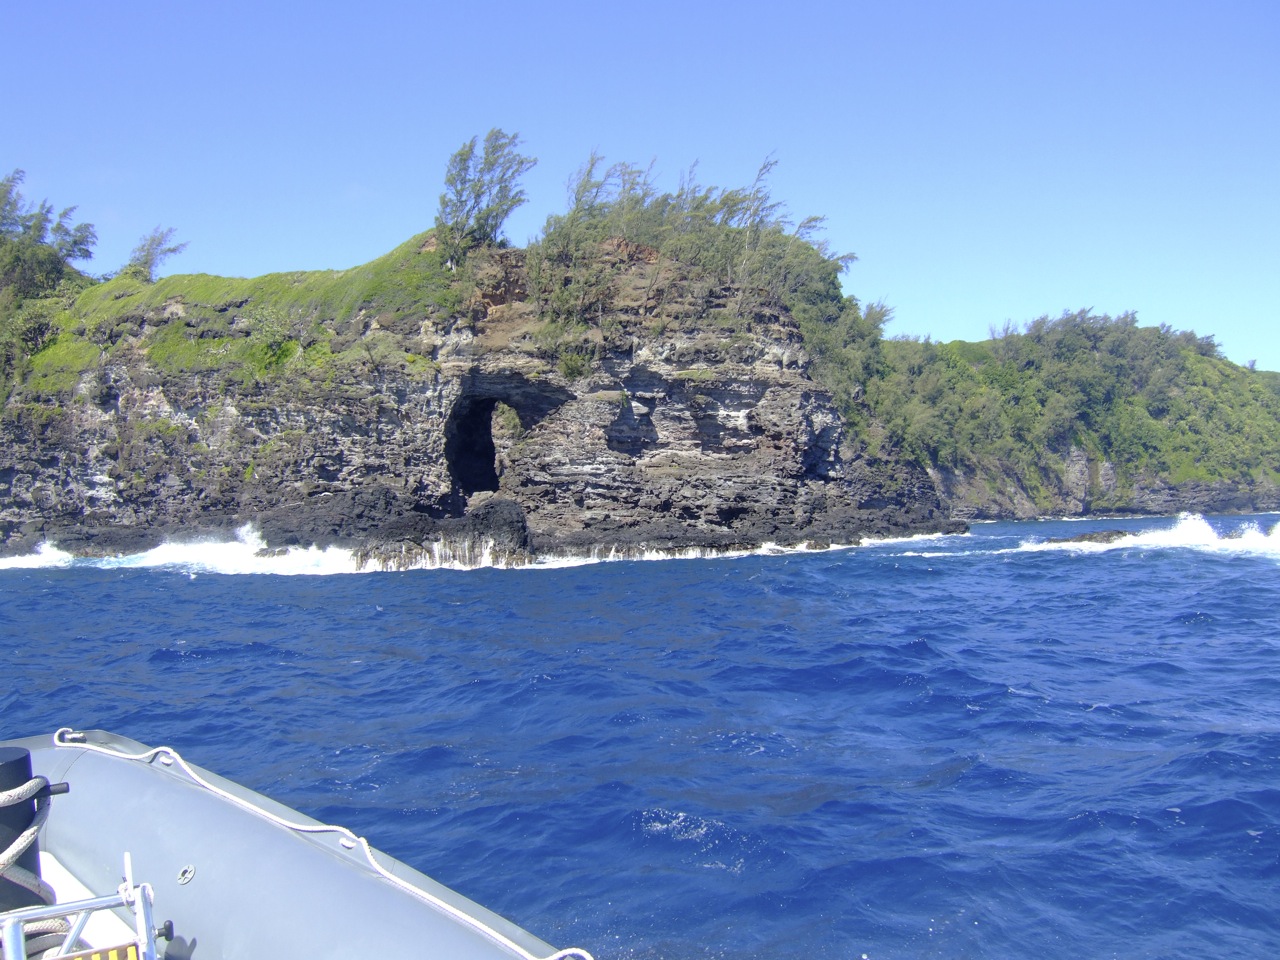 Diving Maui's North Shore